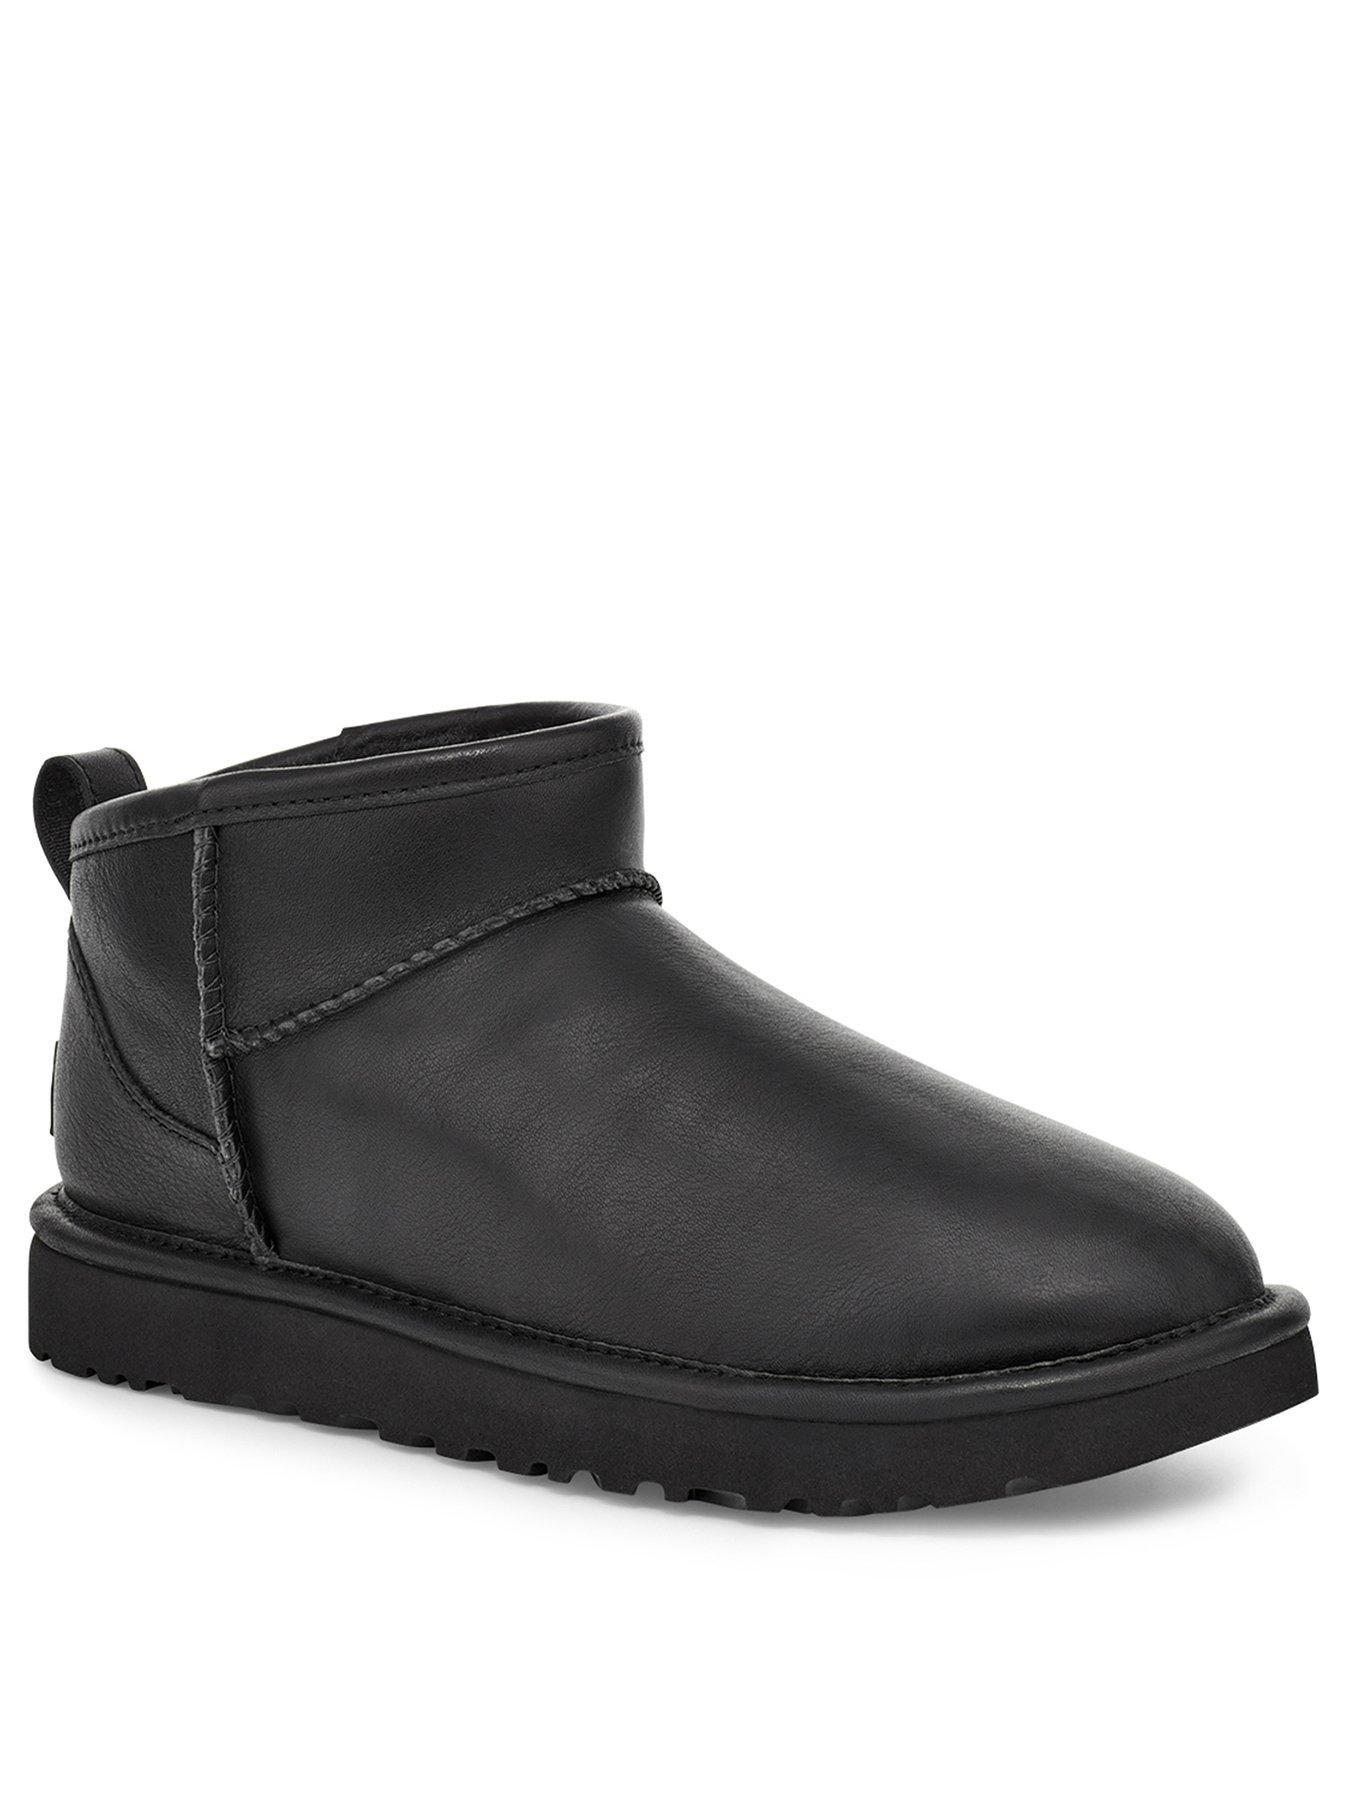 black leather ugg boots uk